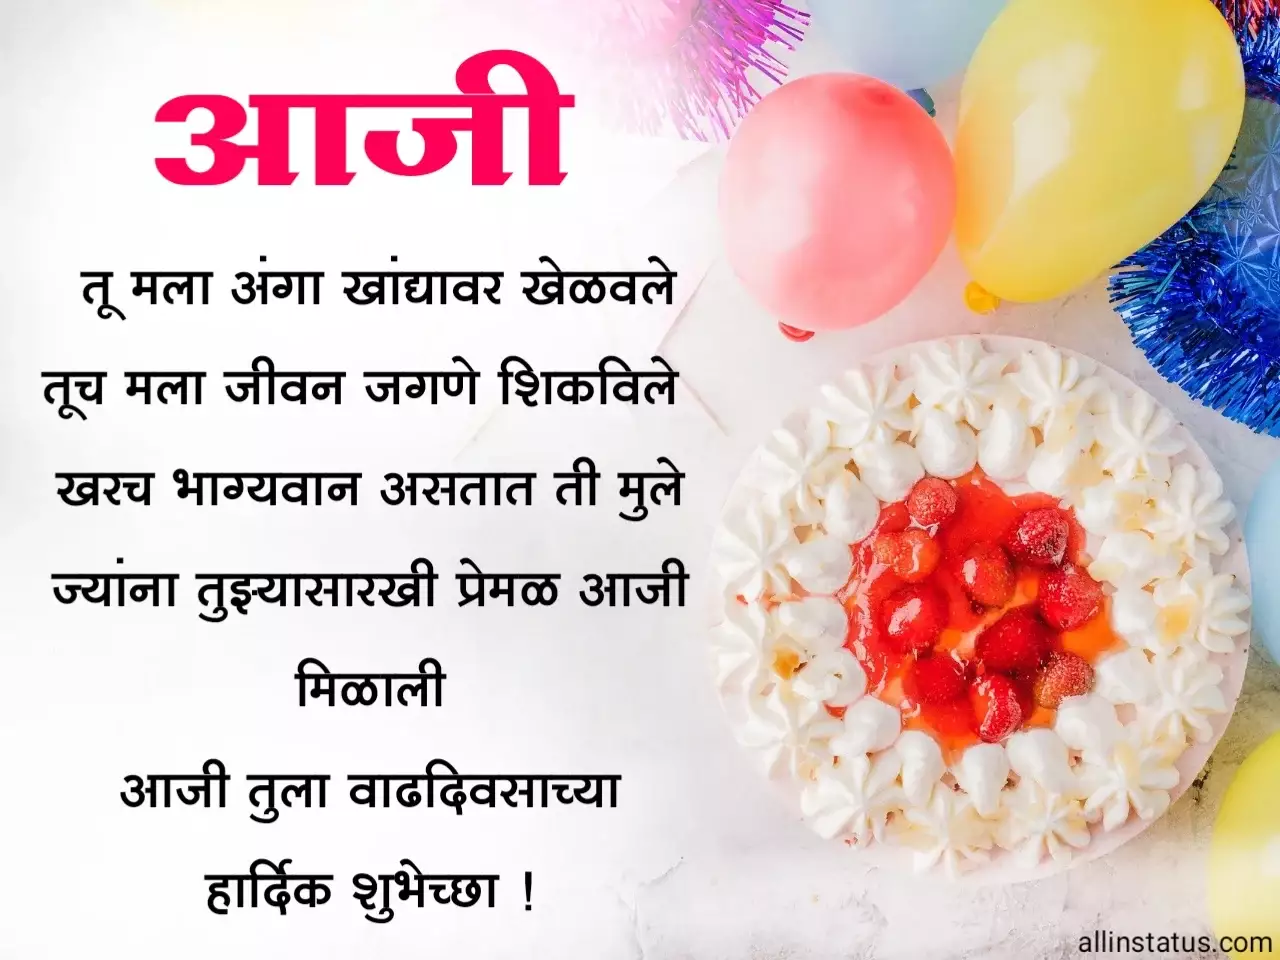 Happy Birthday Image for grandmother in marathi